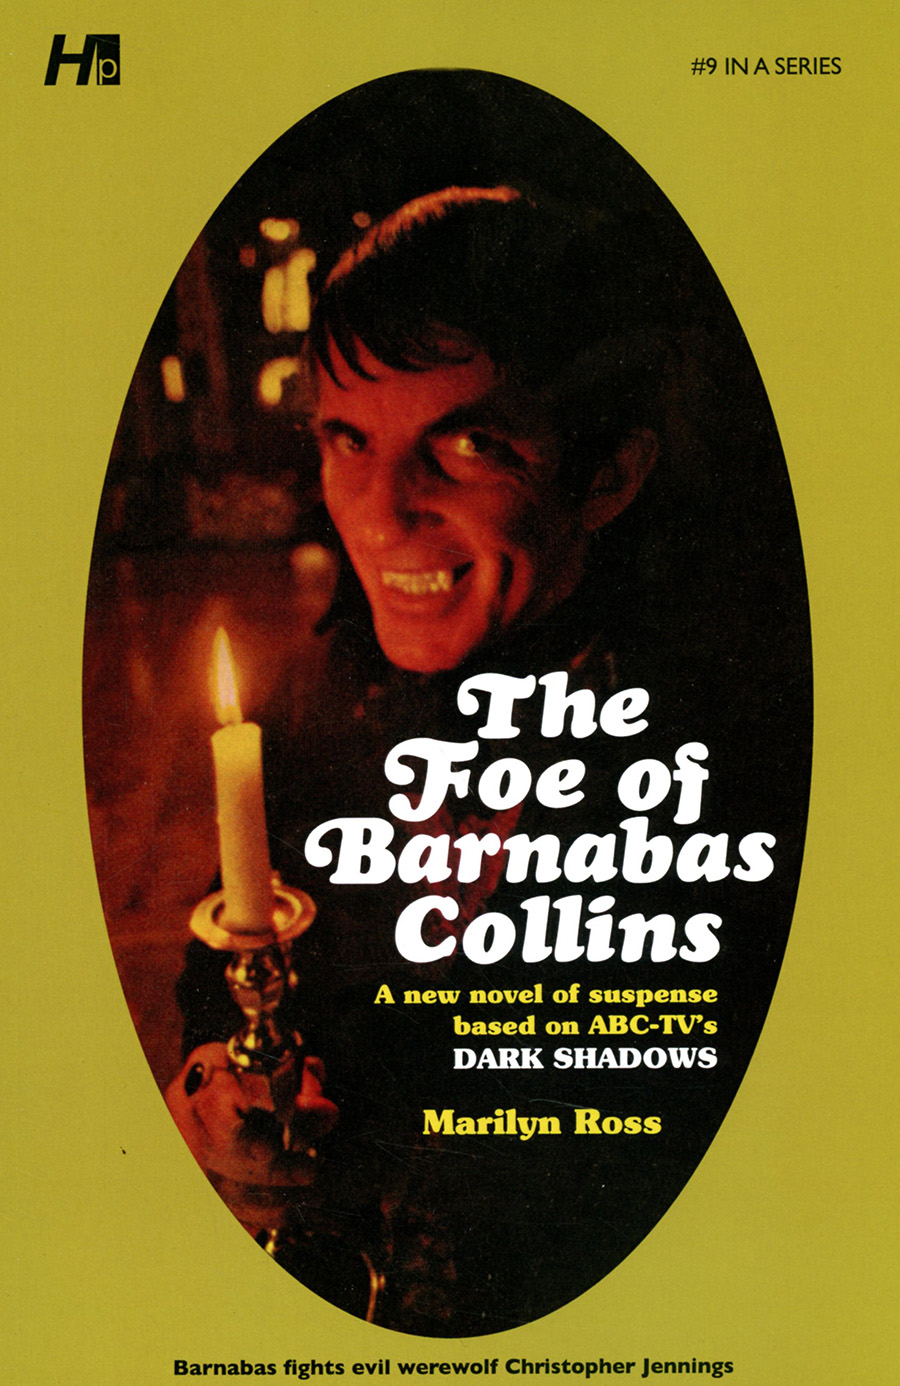 Dark Shadows Paperback Library Novel Vol 9 Foe Of Barnabas Collins TP